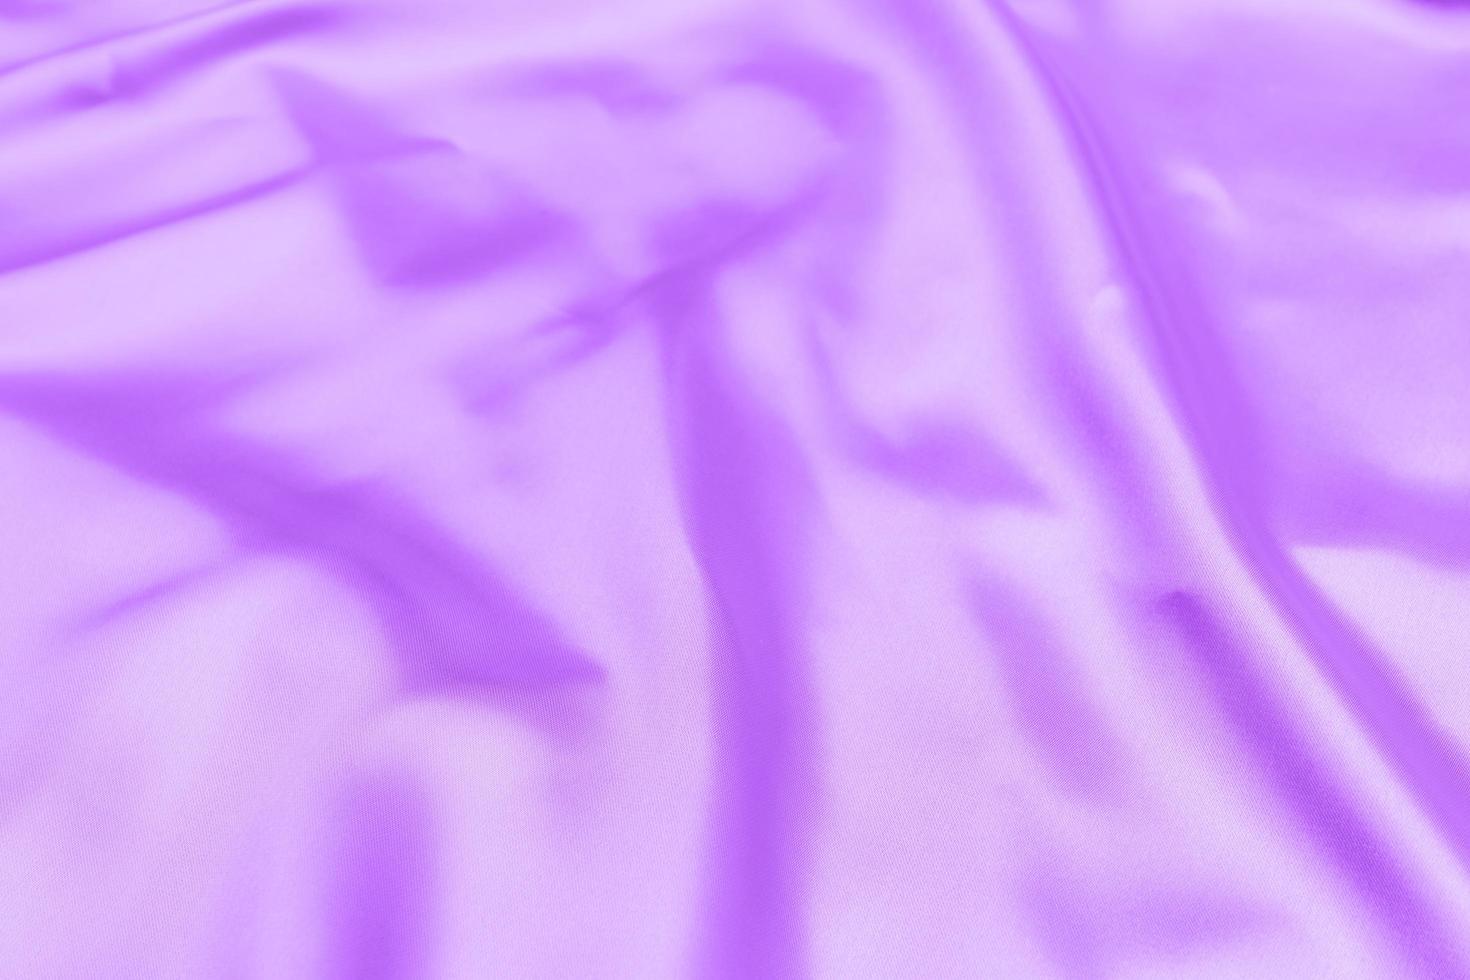 proton purple satin fabric texture soft blur background photo